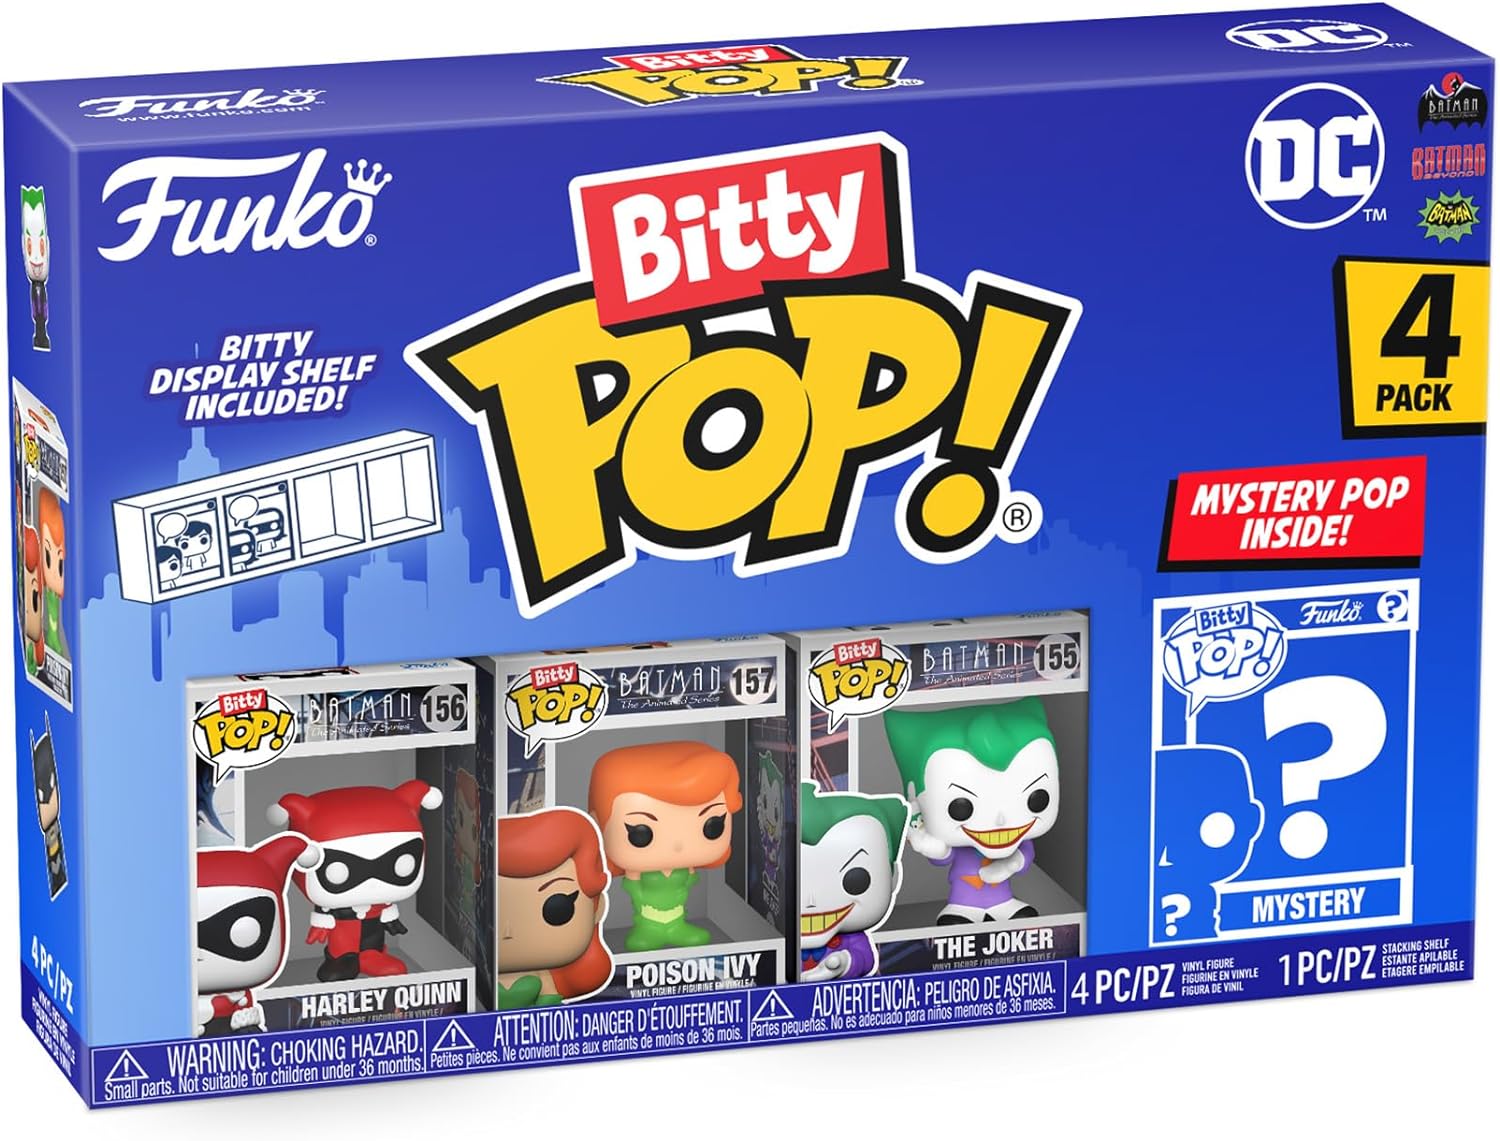 Funko Bitty Pop Harley Quinn, Poison Ivy, The Joker, Mystery (?) 4 Pack (DC)